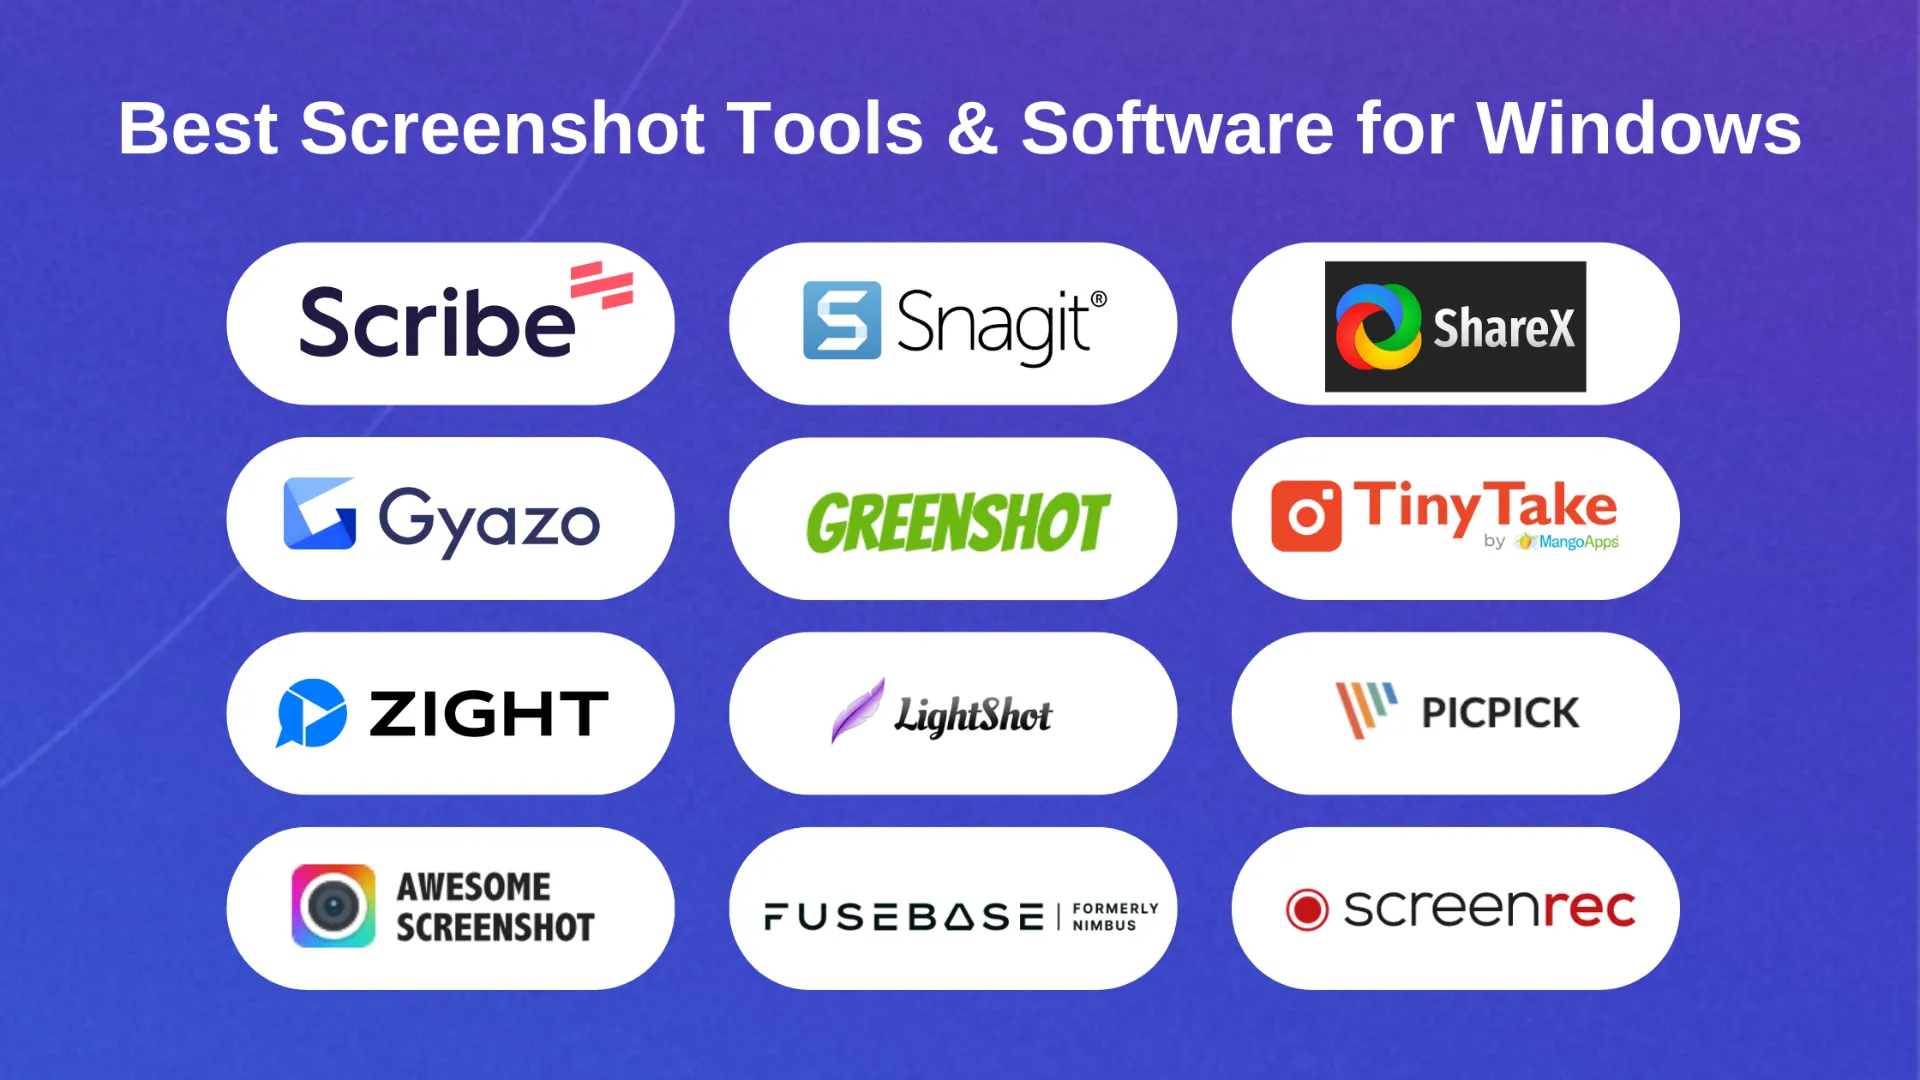 17 Best Screenshot Tools & Software for Windows